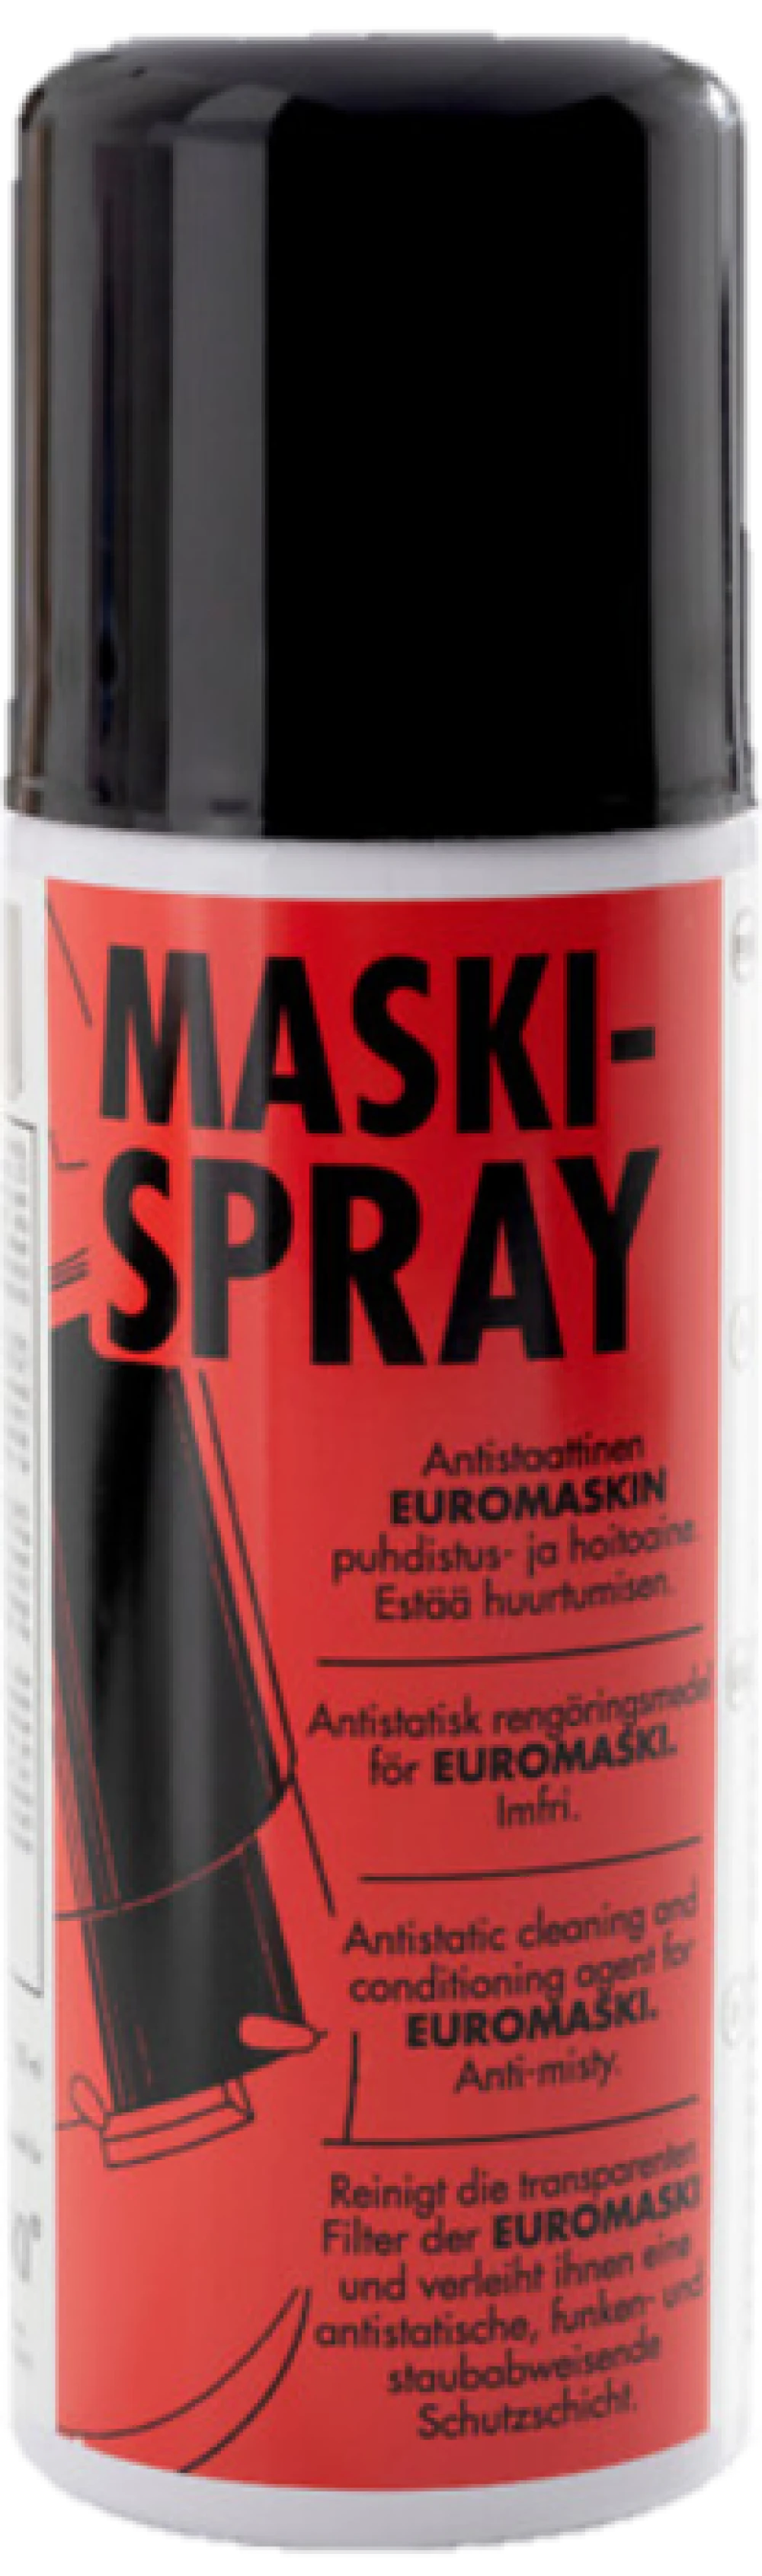 Masque Spray nettoyant de visière